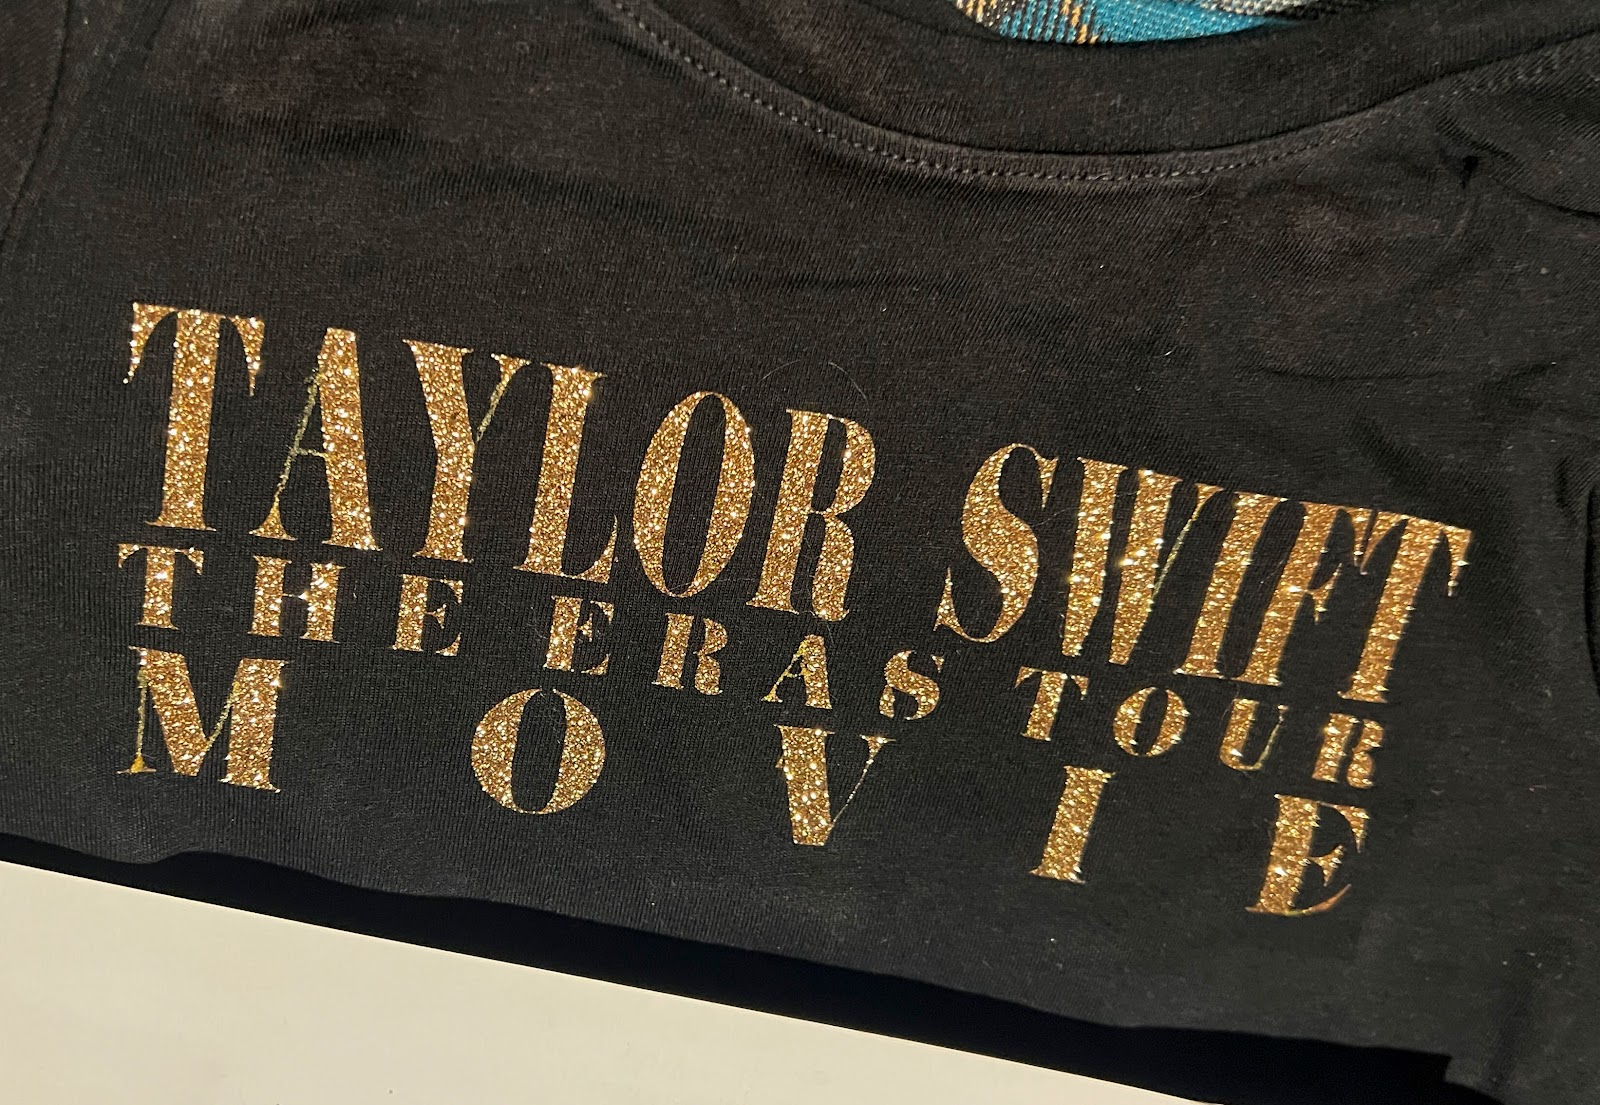 How To Make Friendship Bracelets (Taylor Swift Eras Tour Version)